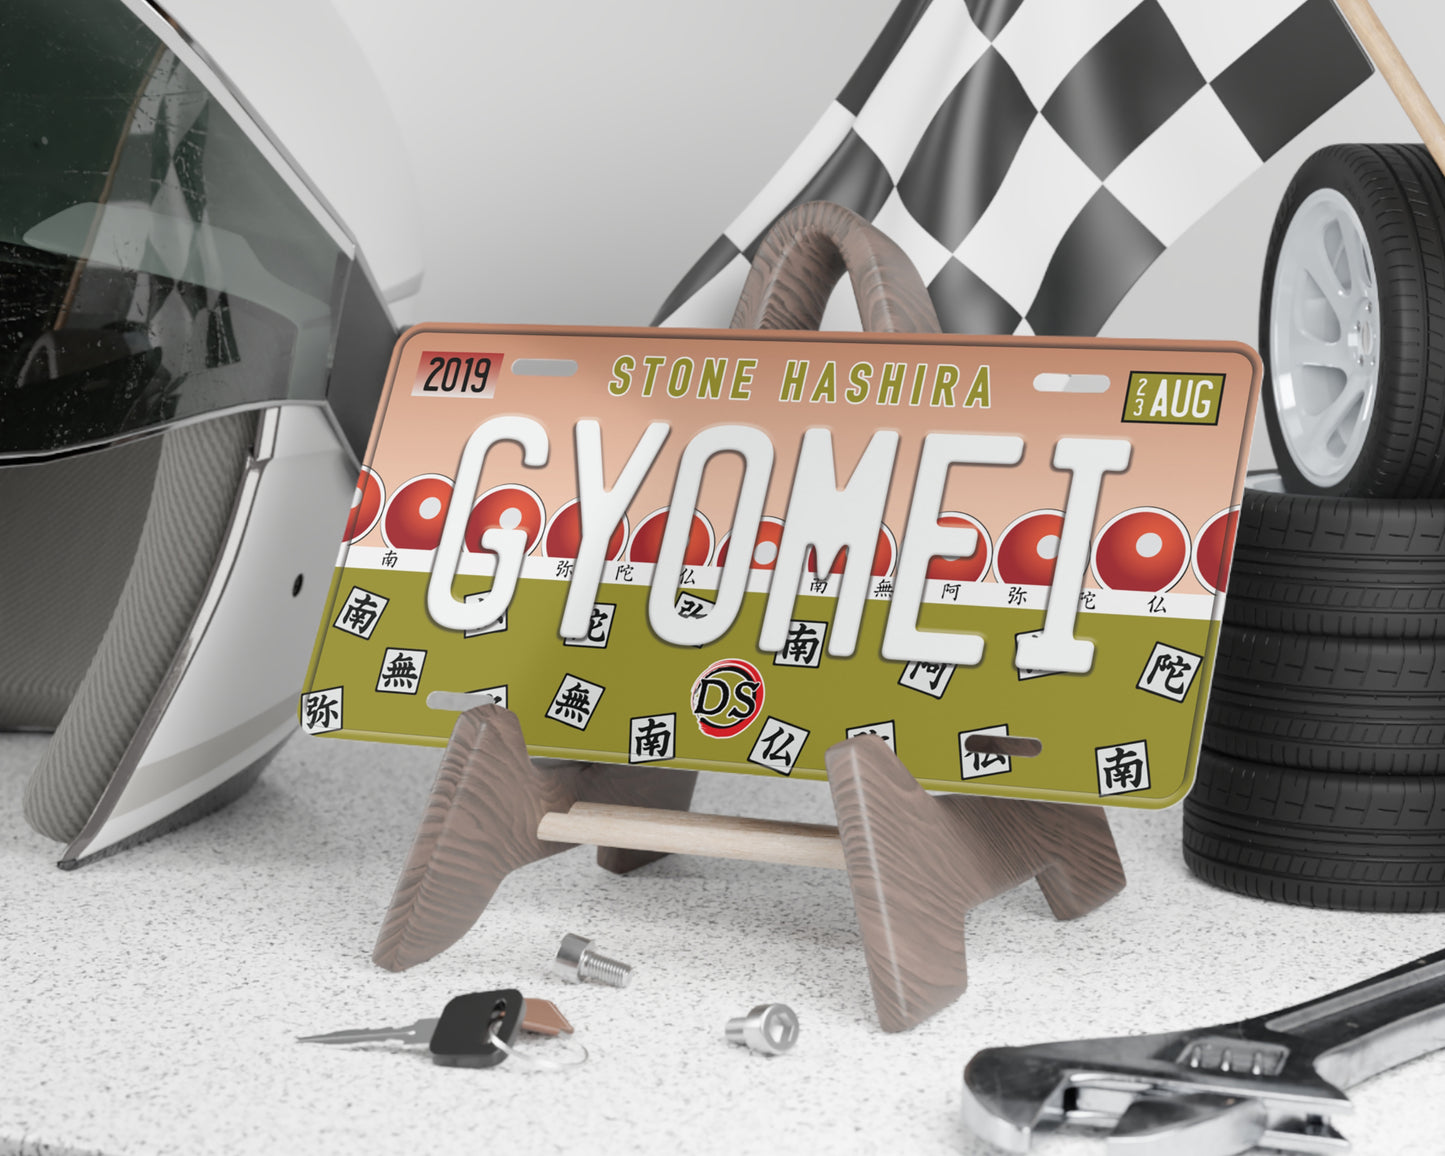 Gyomei license plate